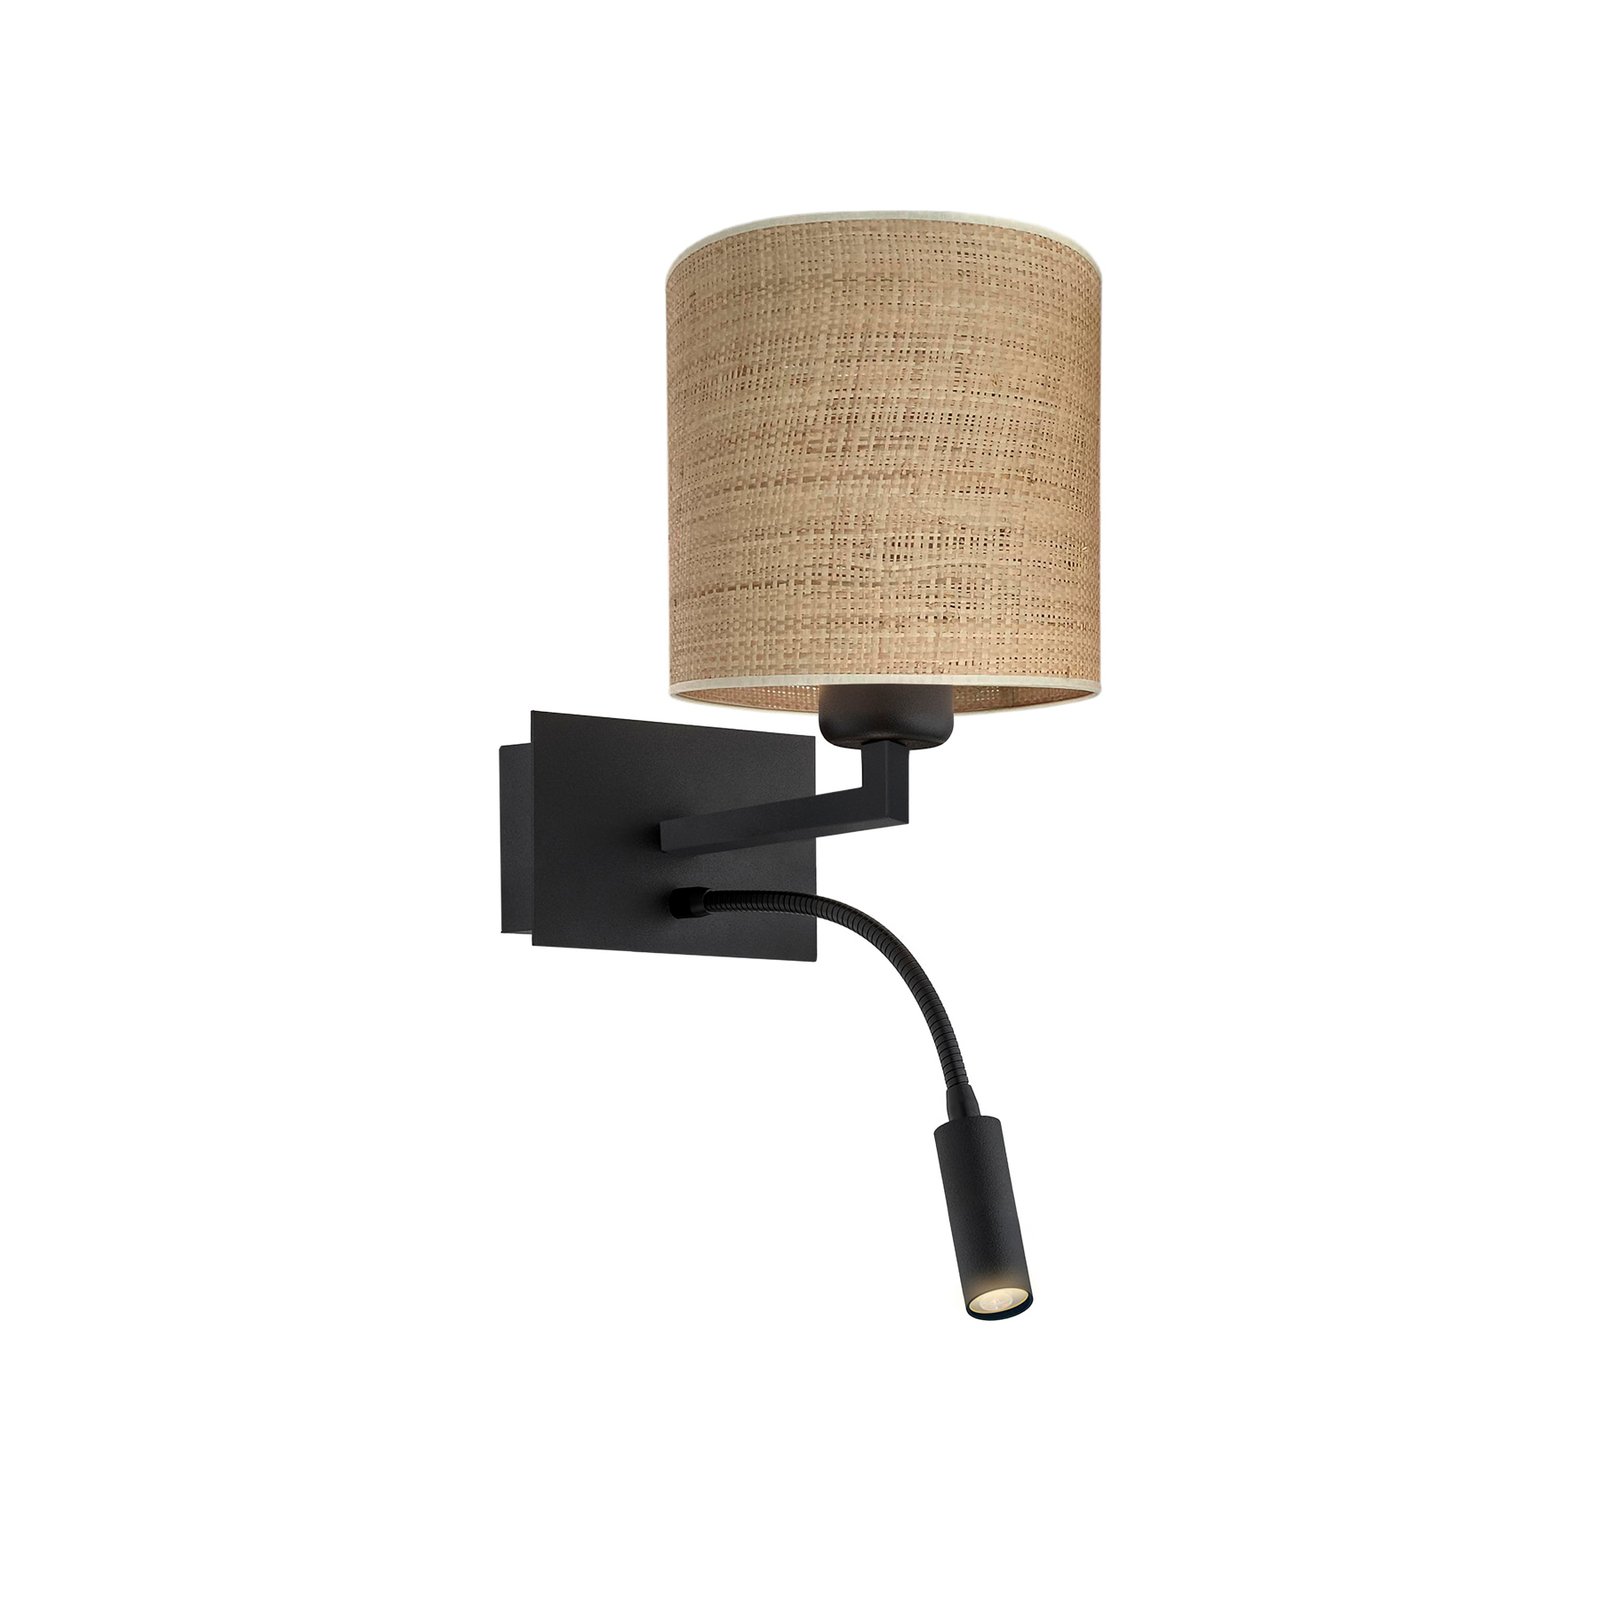 Harry wall lamp, round, black/light jute